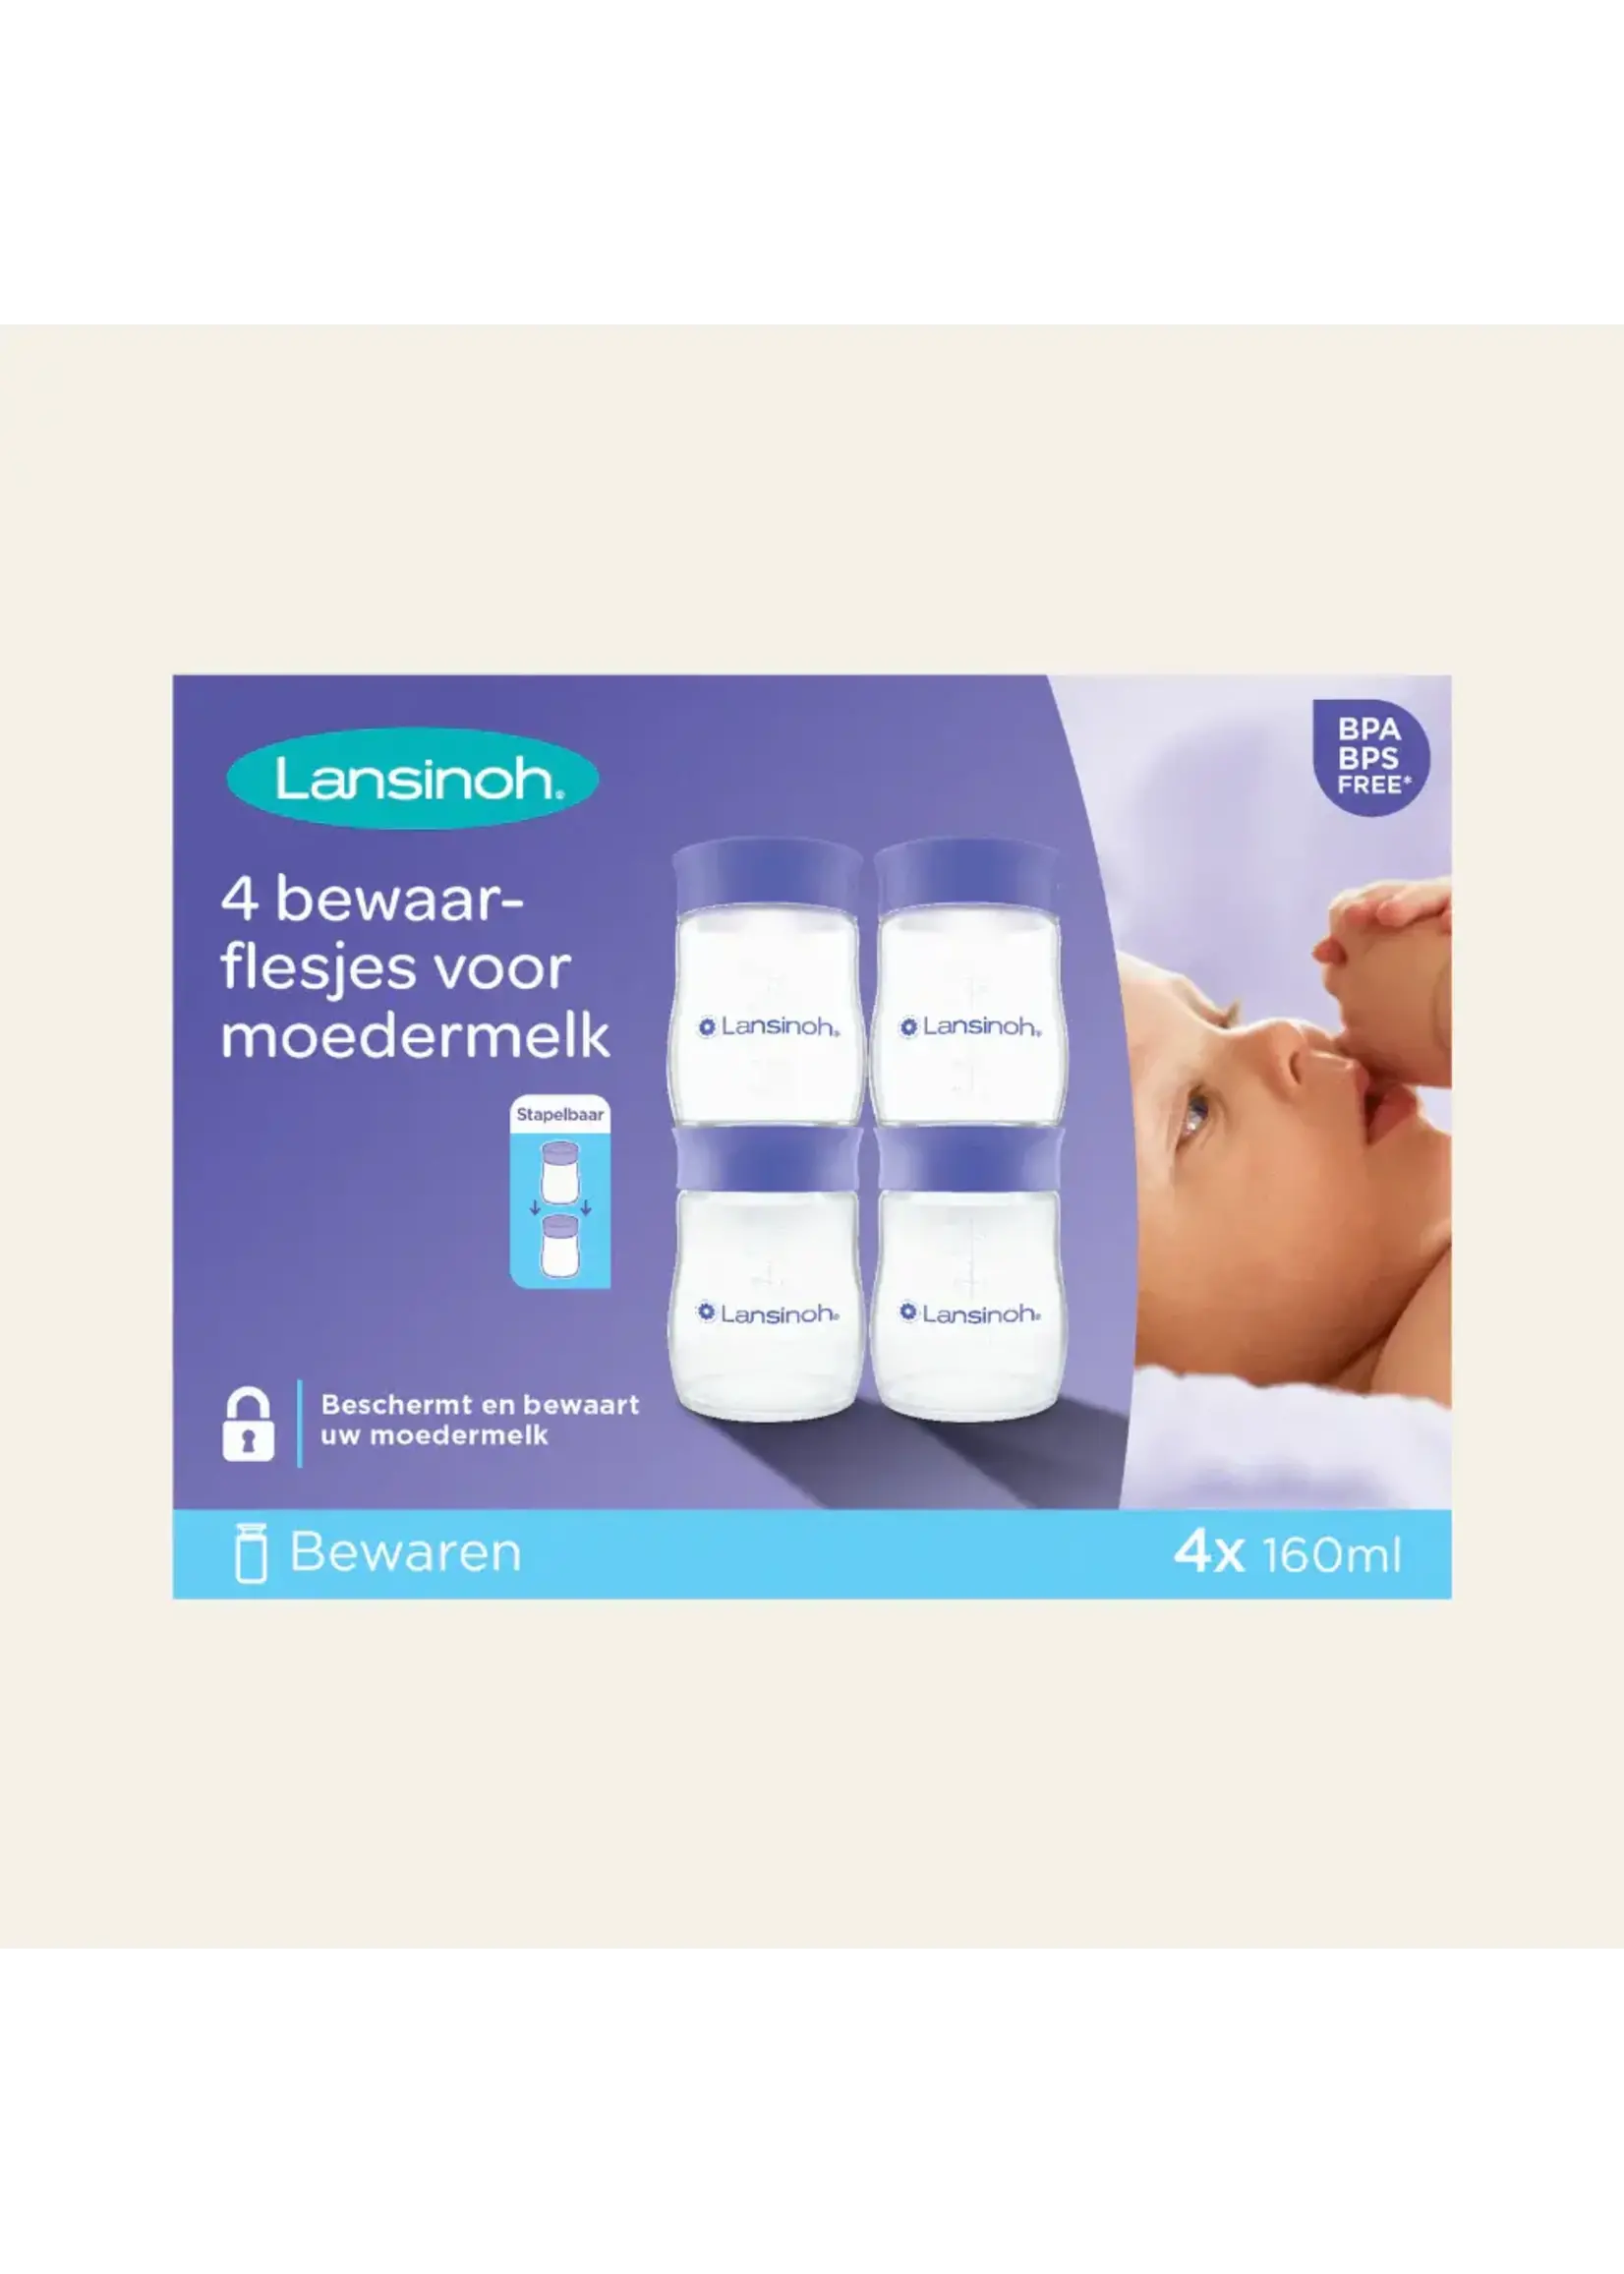 Lansinoh Lansinoh / Bewaarflesjes moedermelk / 4x 160ml